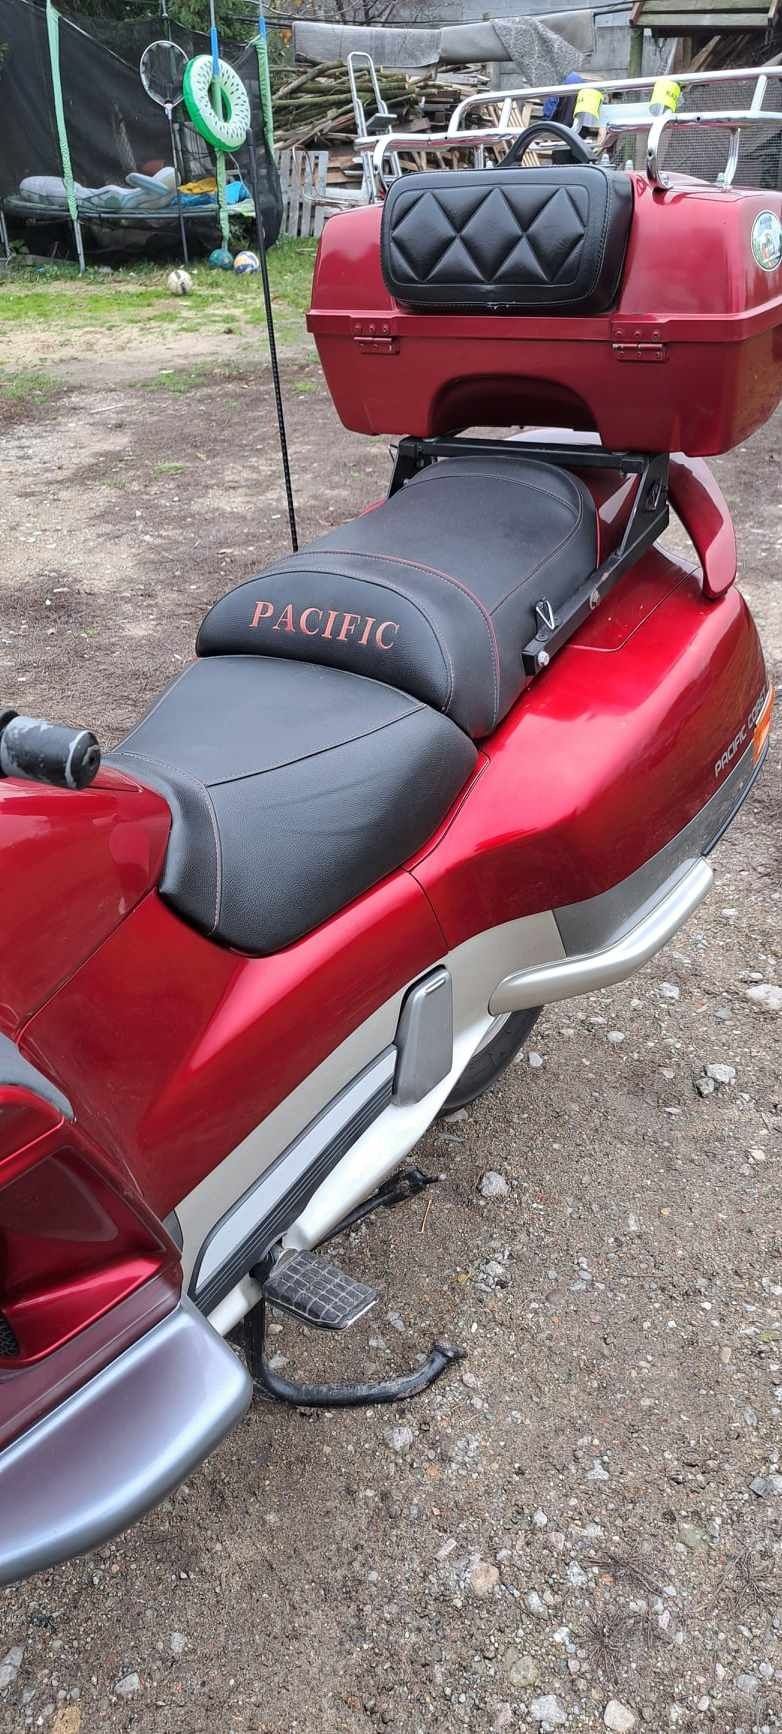 Motocykl Honda Pacyfik